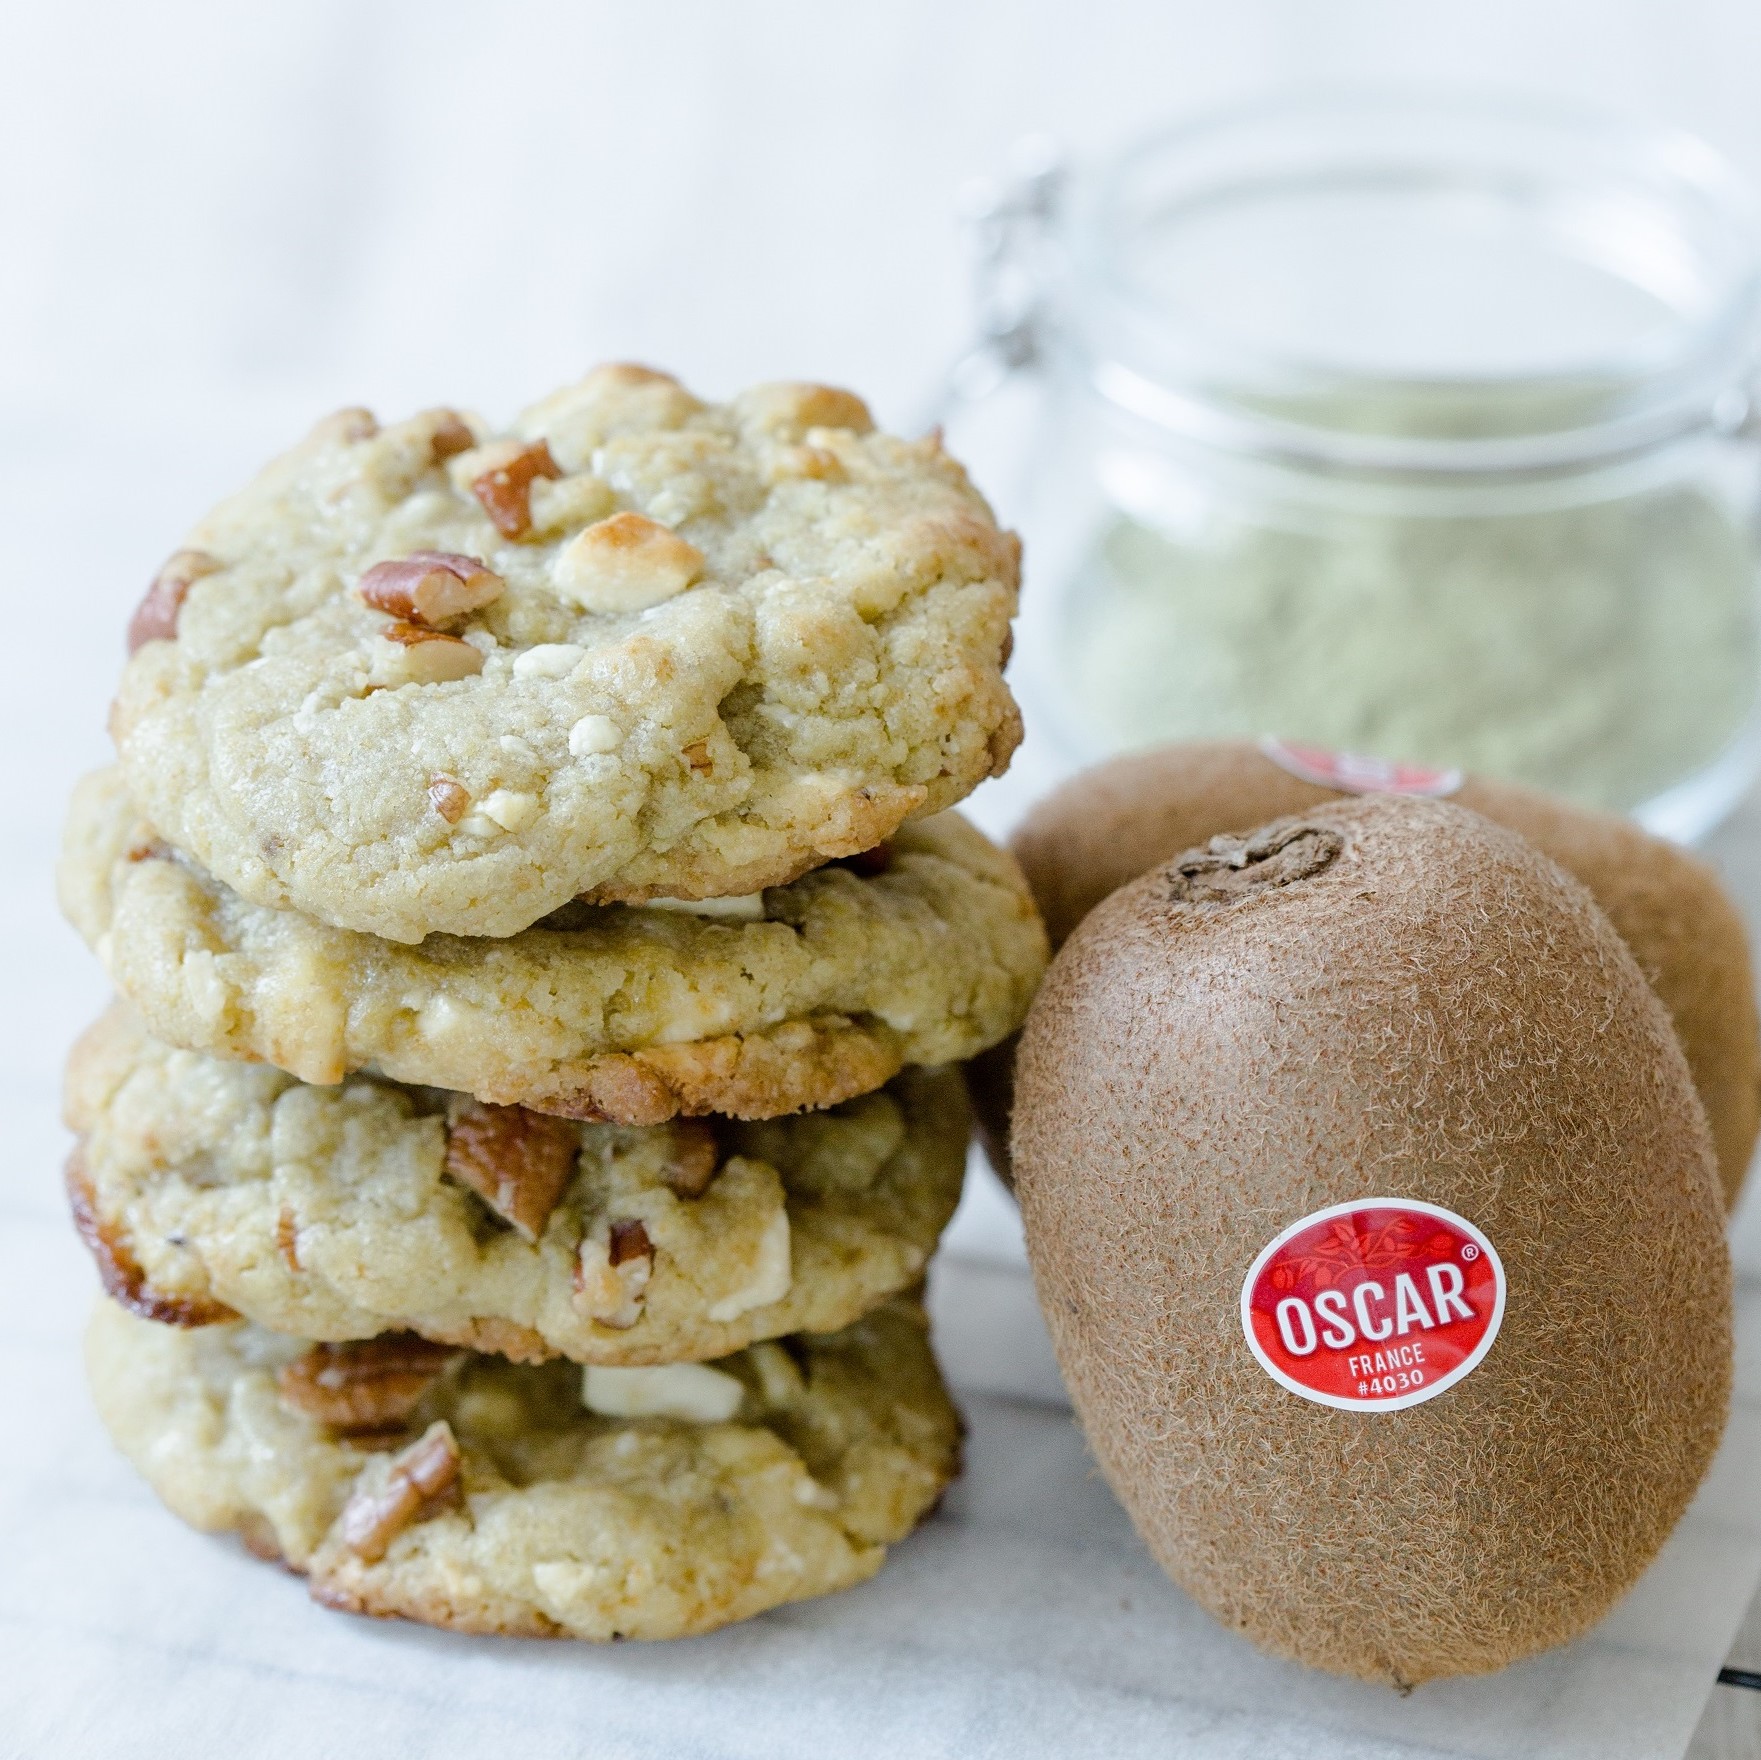 Matcha cookies with Oscar® kiwi fruits